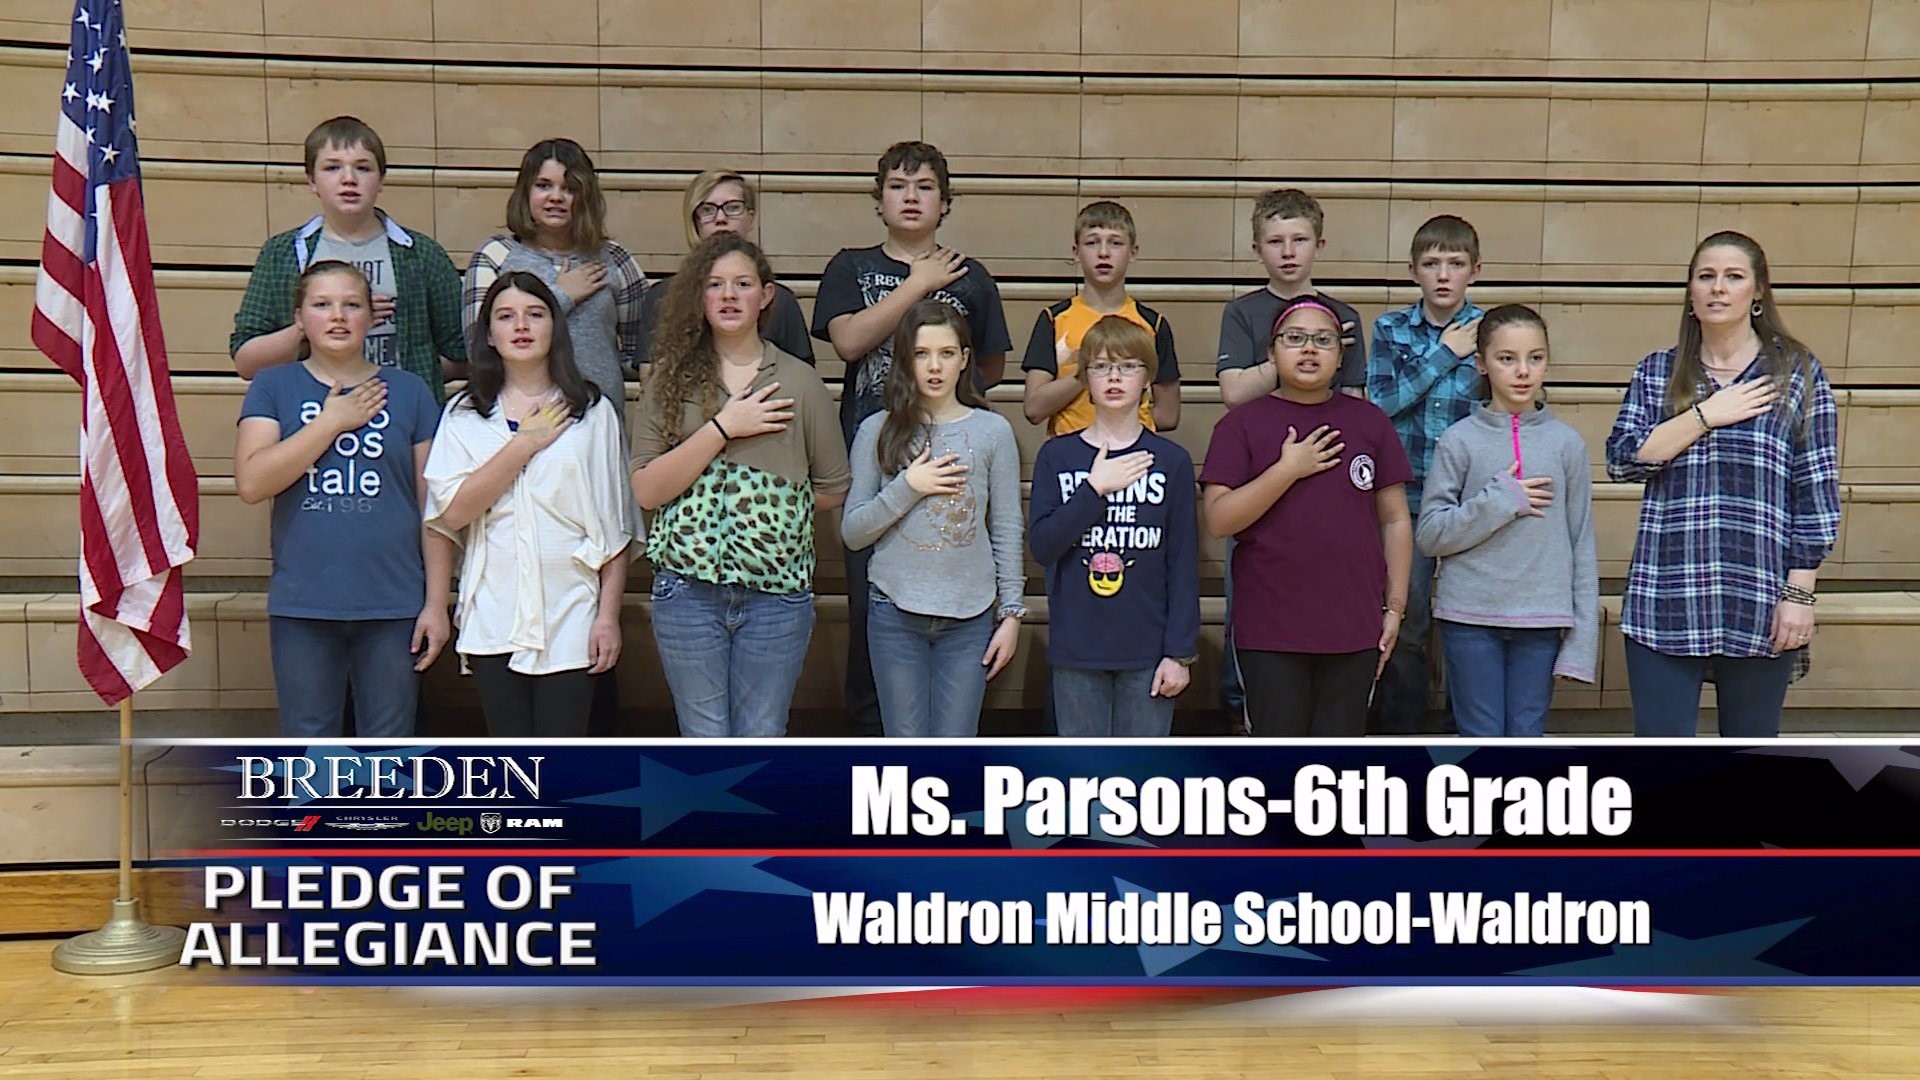 Ms. Parsons- 6th Grade Waldron Middle School, Waldron